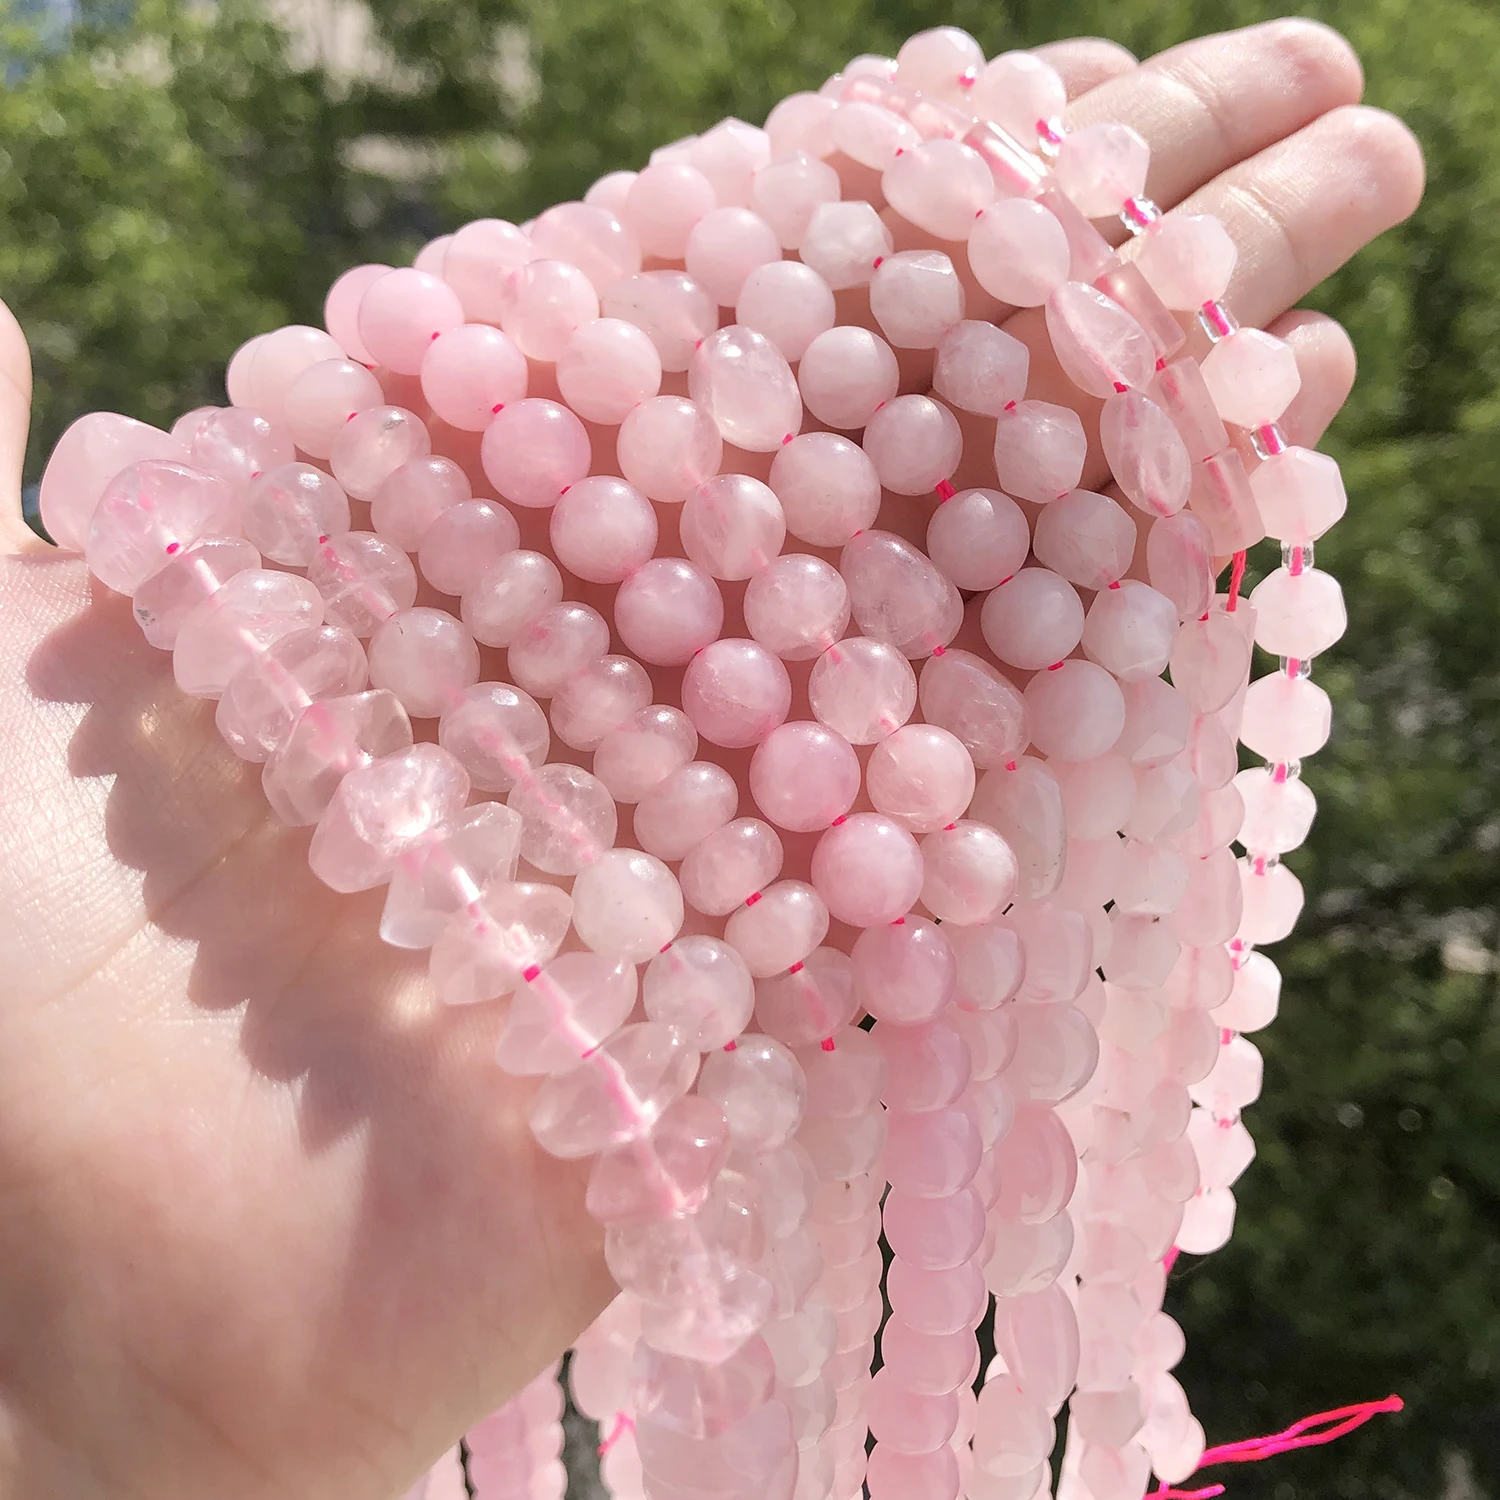 8mm Natural Rose Quartz Beads Round Gemstone Loose Beads for Jewelry Making  (45-48pcs/strand)